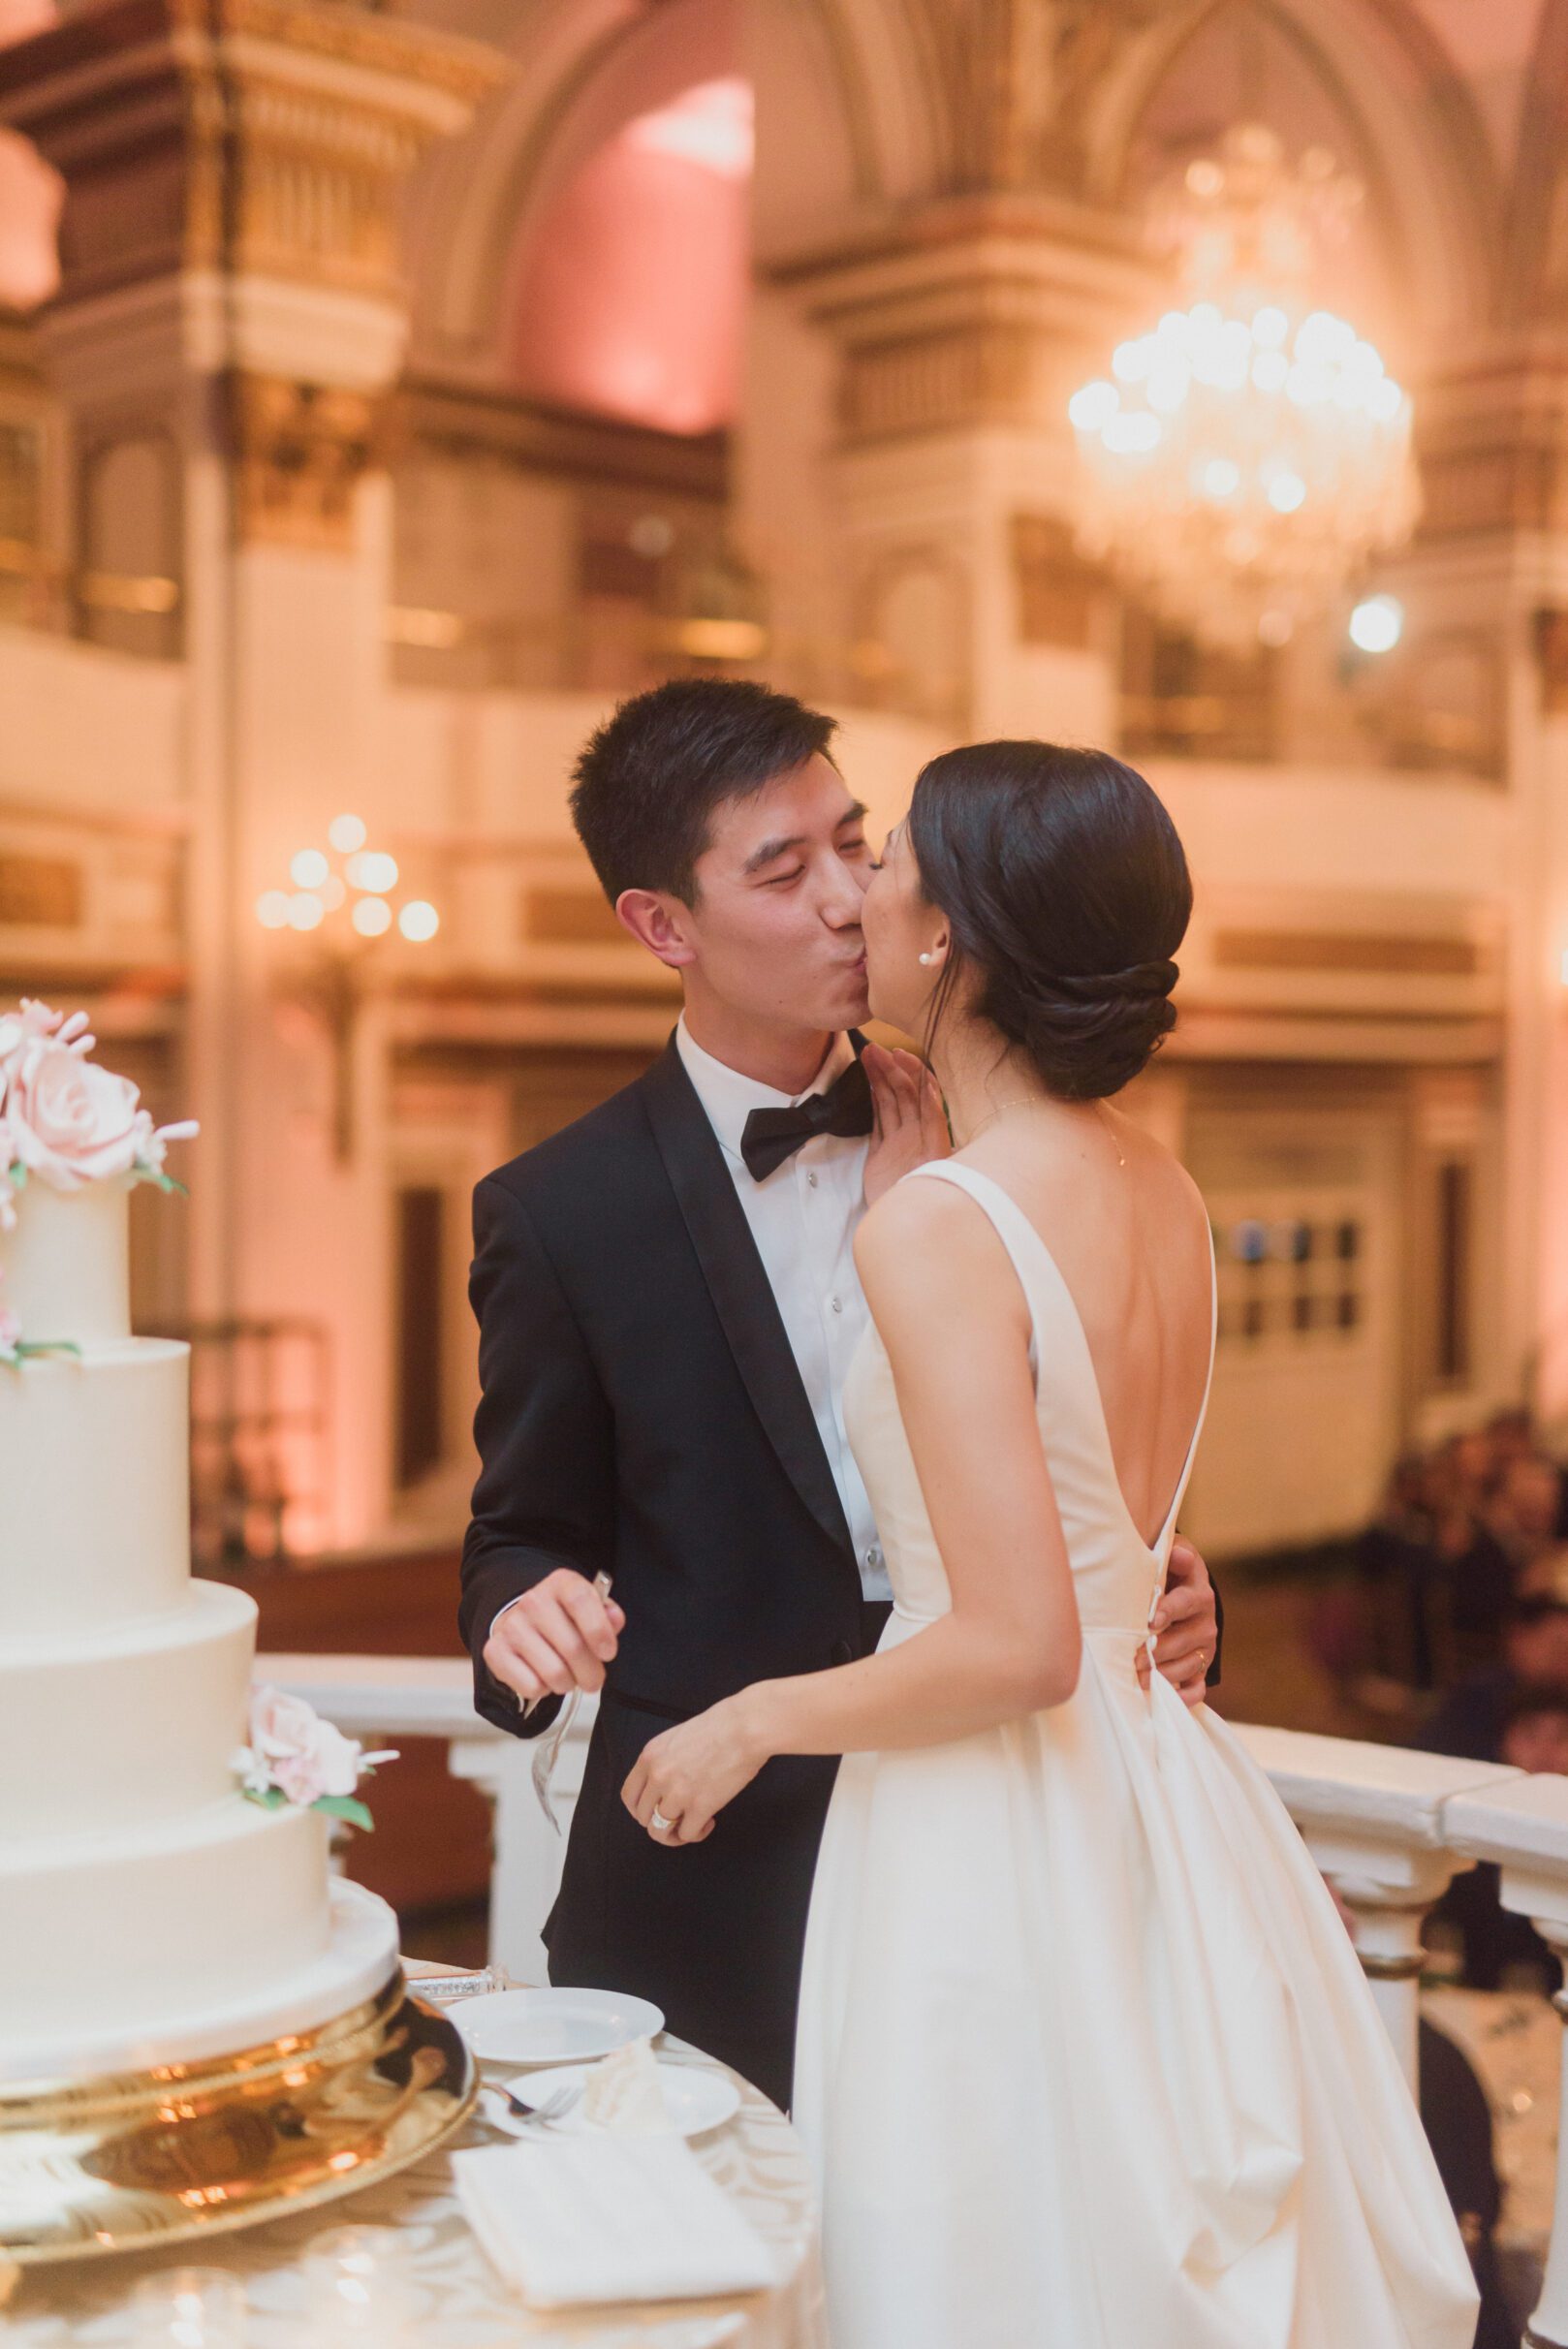 boston wedding photographers fairmont copley plaza hotel wedding cake cutting